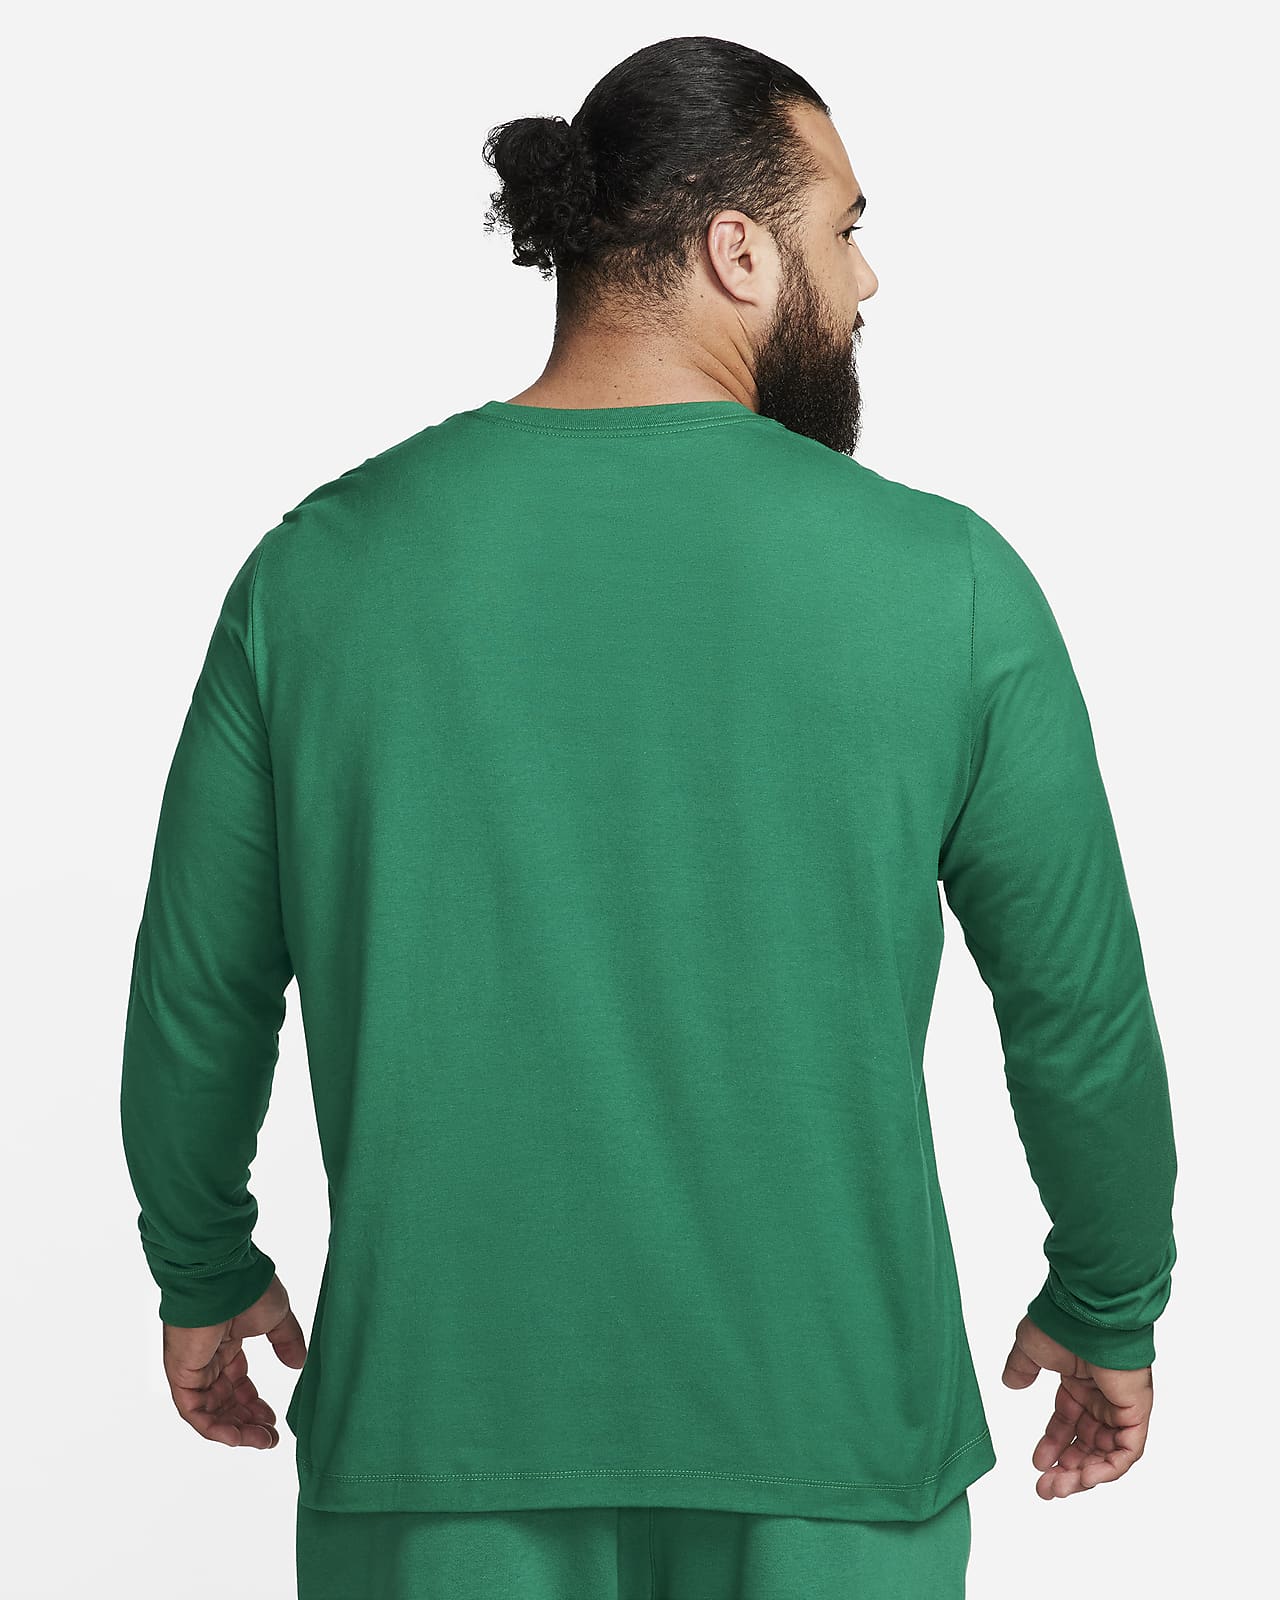 Men's Long Sleeve Shirts & Tops - True Outdoors